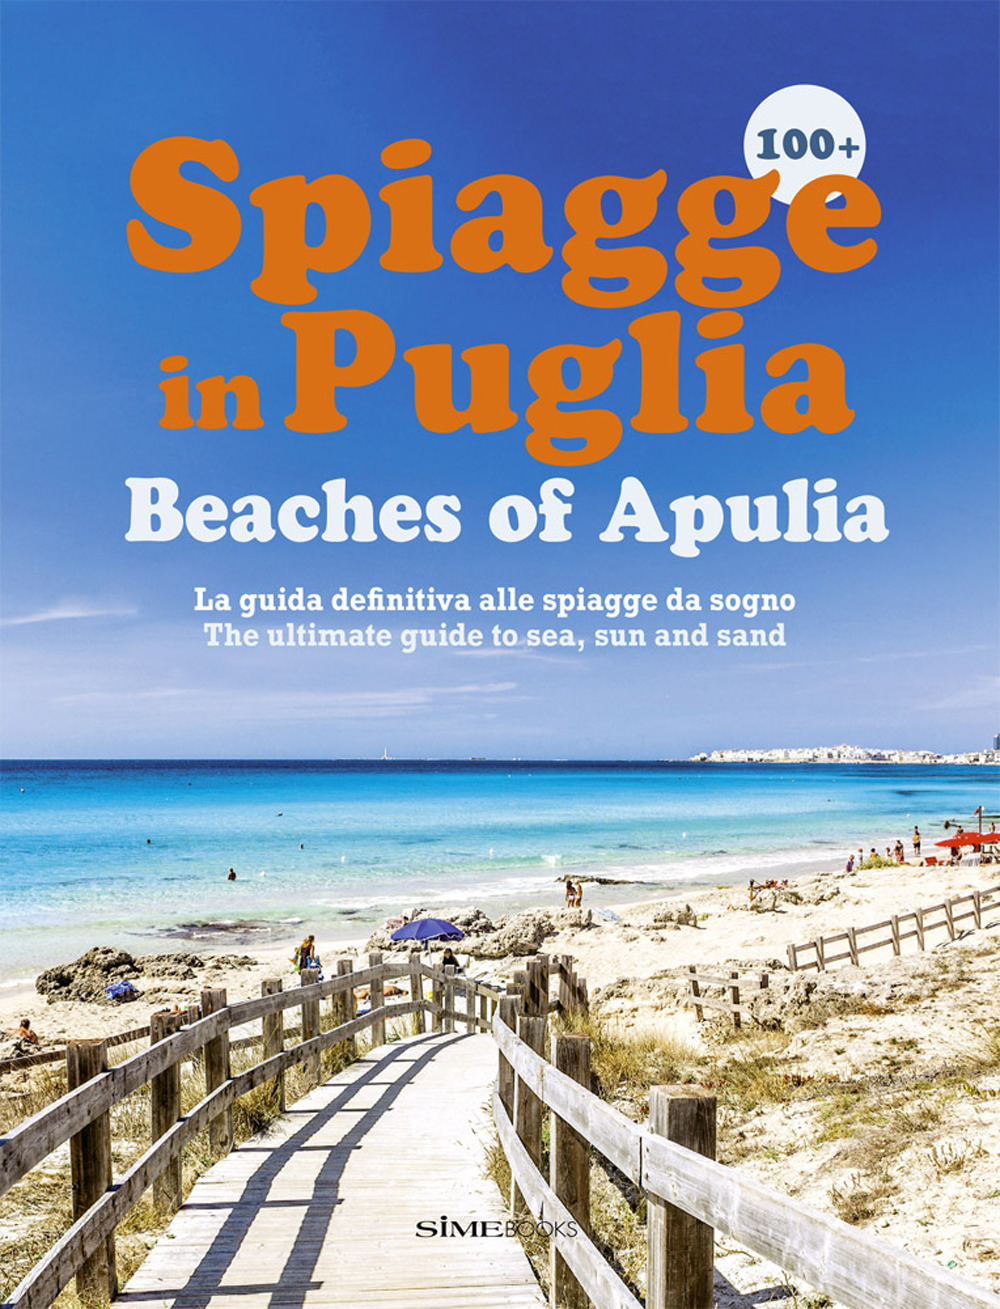 100+ spiagge in Puglia-Beaches of Apulia. Ediz. italiana e inglese